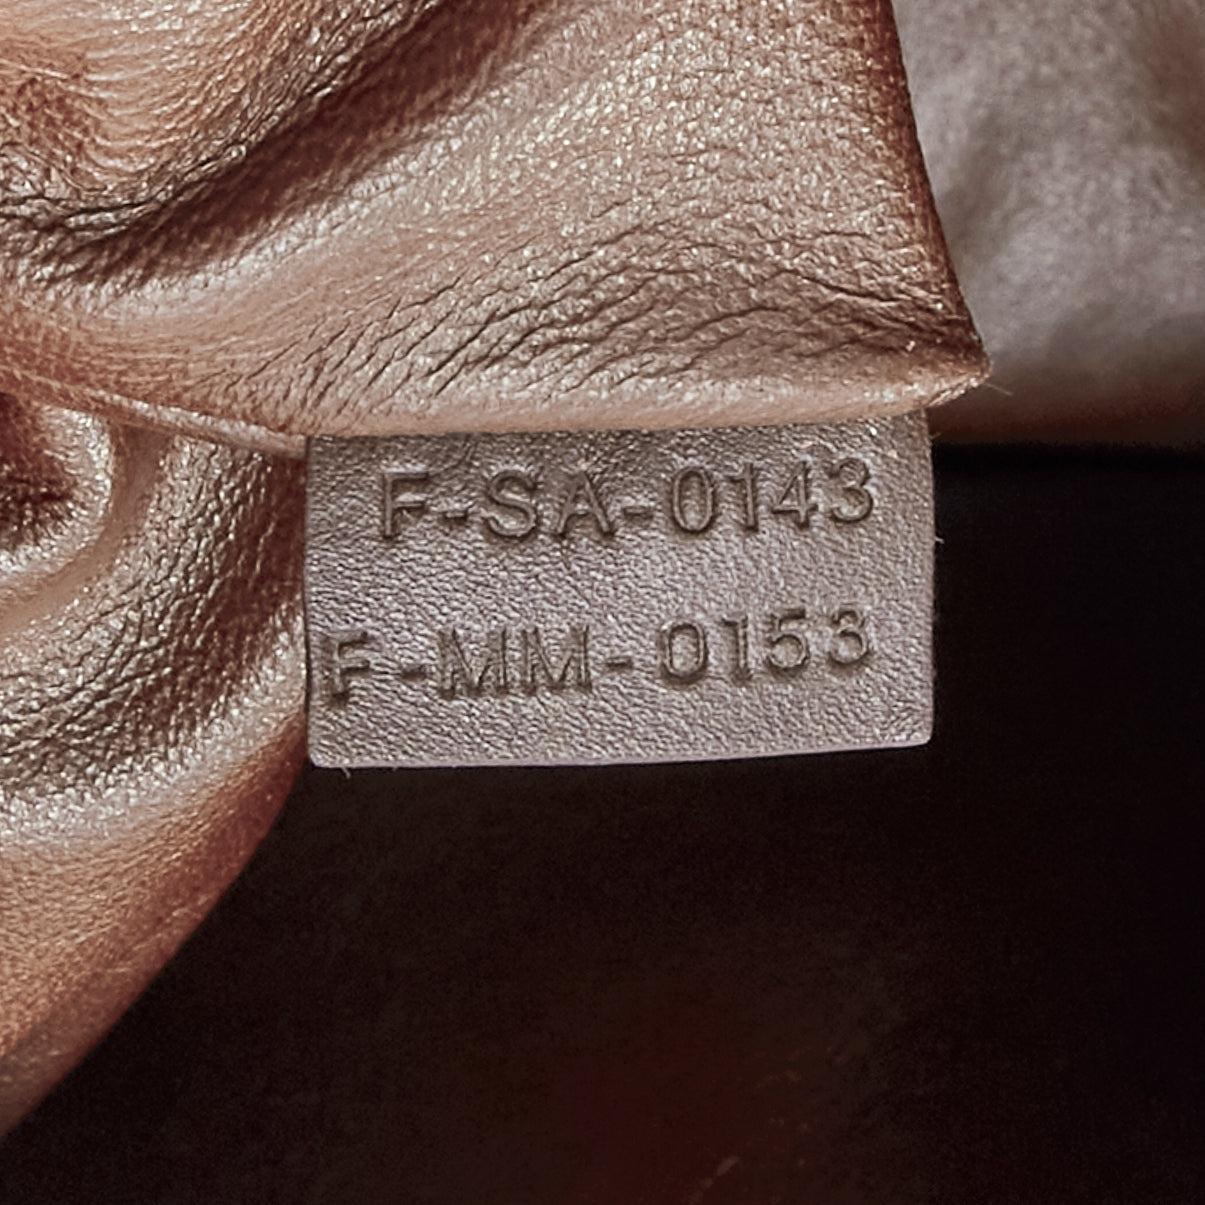 CELINE Luggage burgundy leather front zip logo shopper tote bag 8